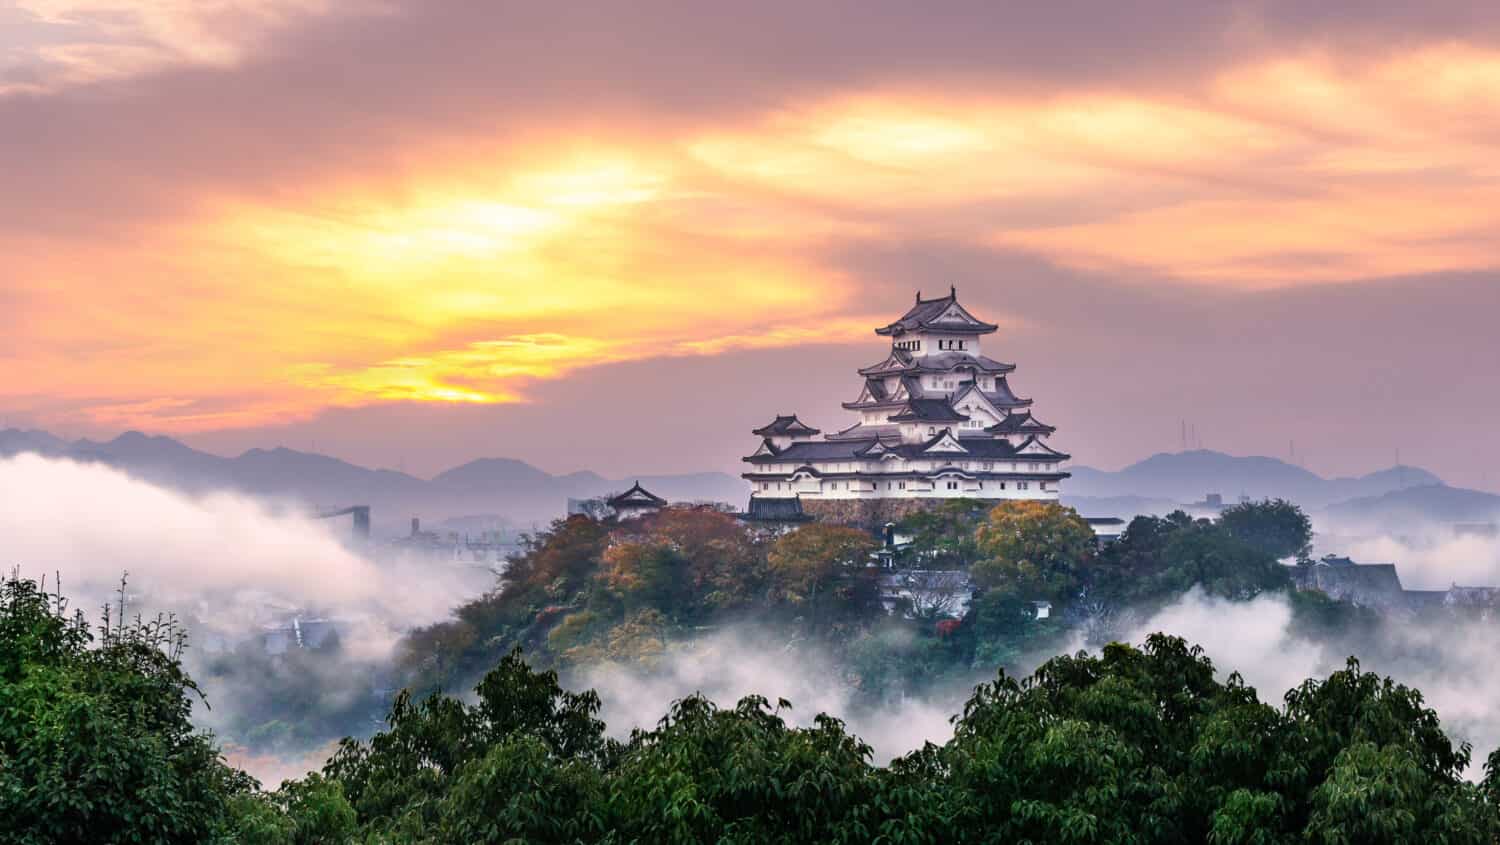 White Egret Castle is nickname of Himeji castle, the great castle in Hyogo, Japan.